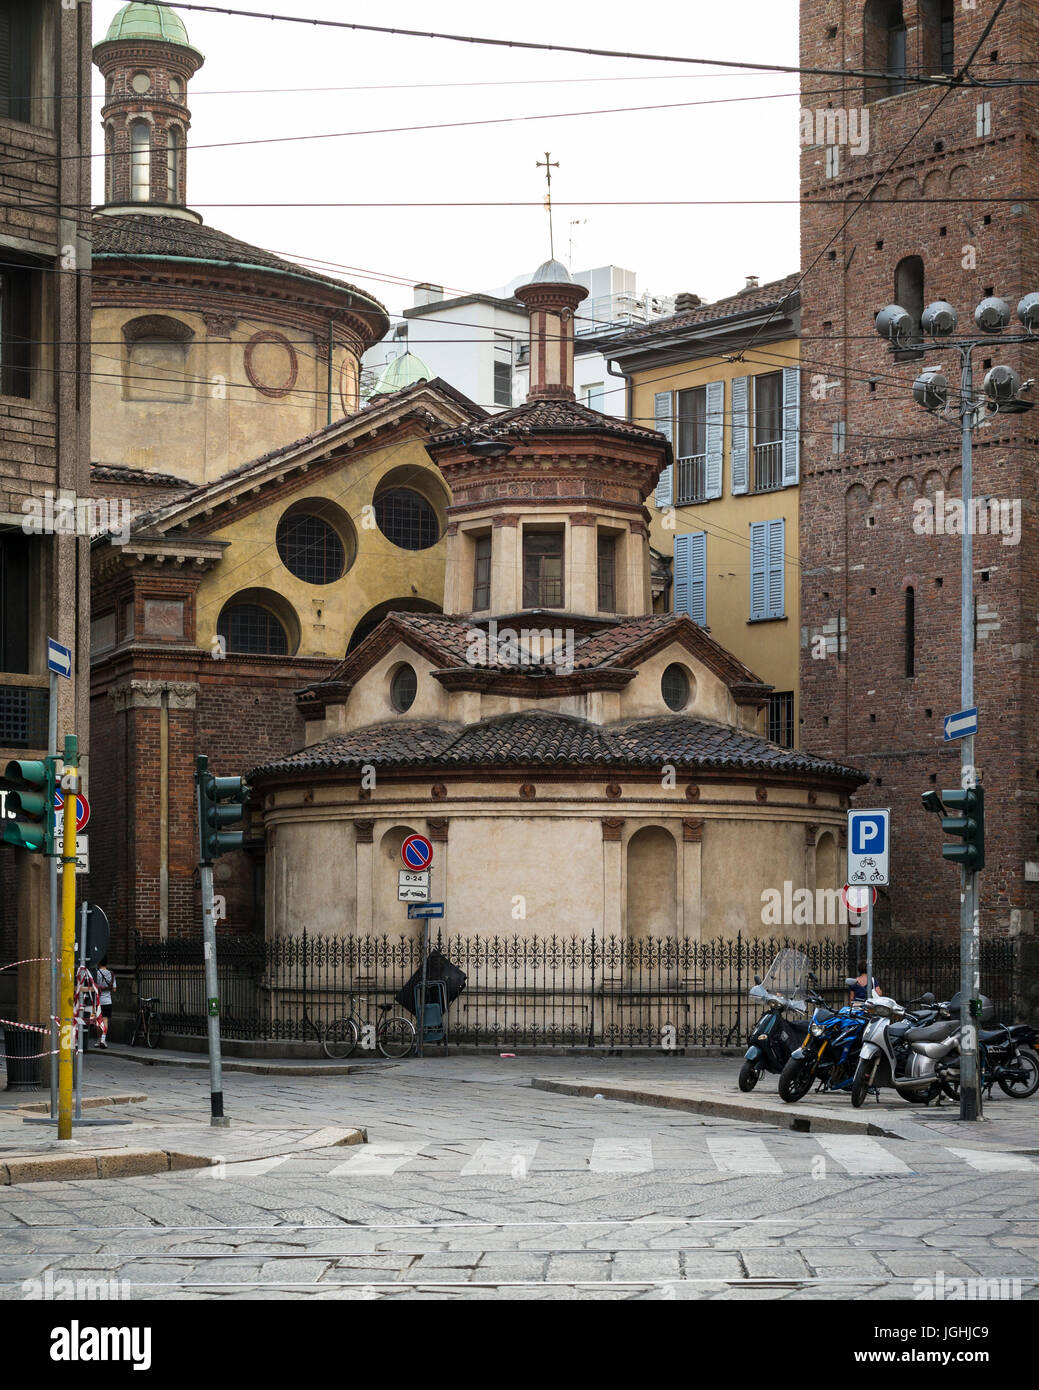 Milan. Italy. 9th century Sacellum of San Satiro adjoining the church of Santa Maria presso San Satiro. Stock Photo